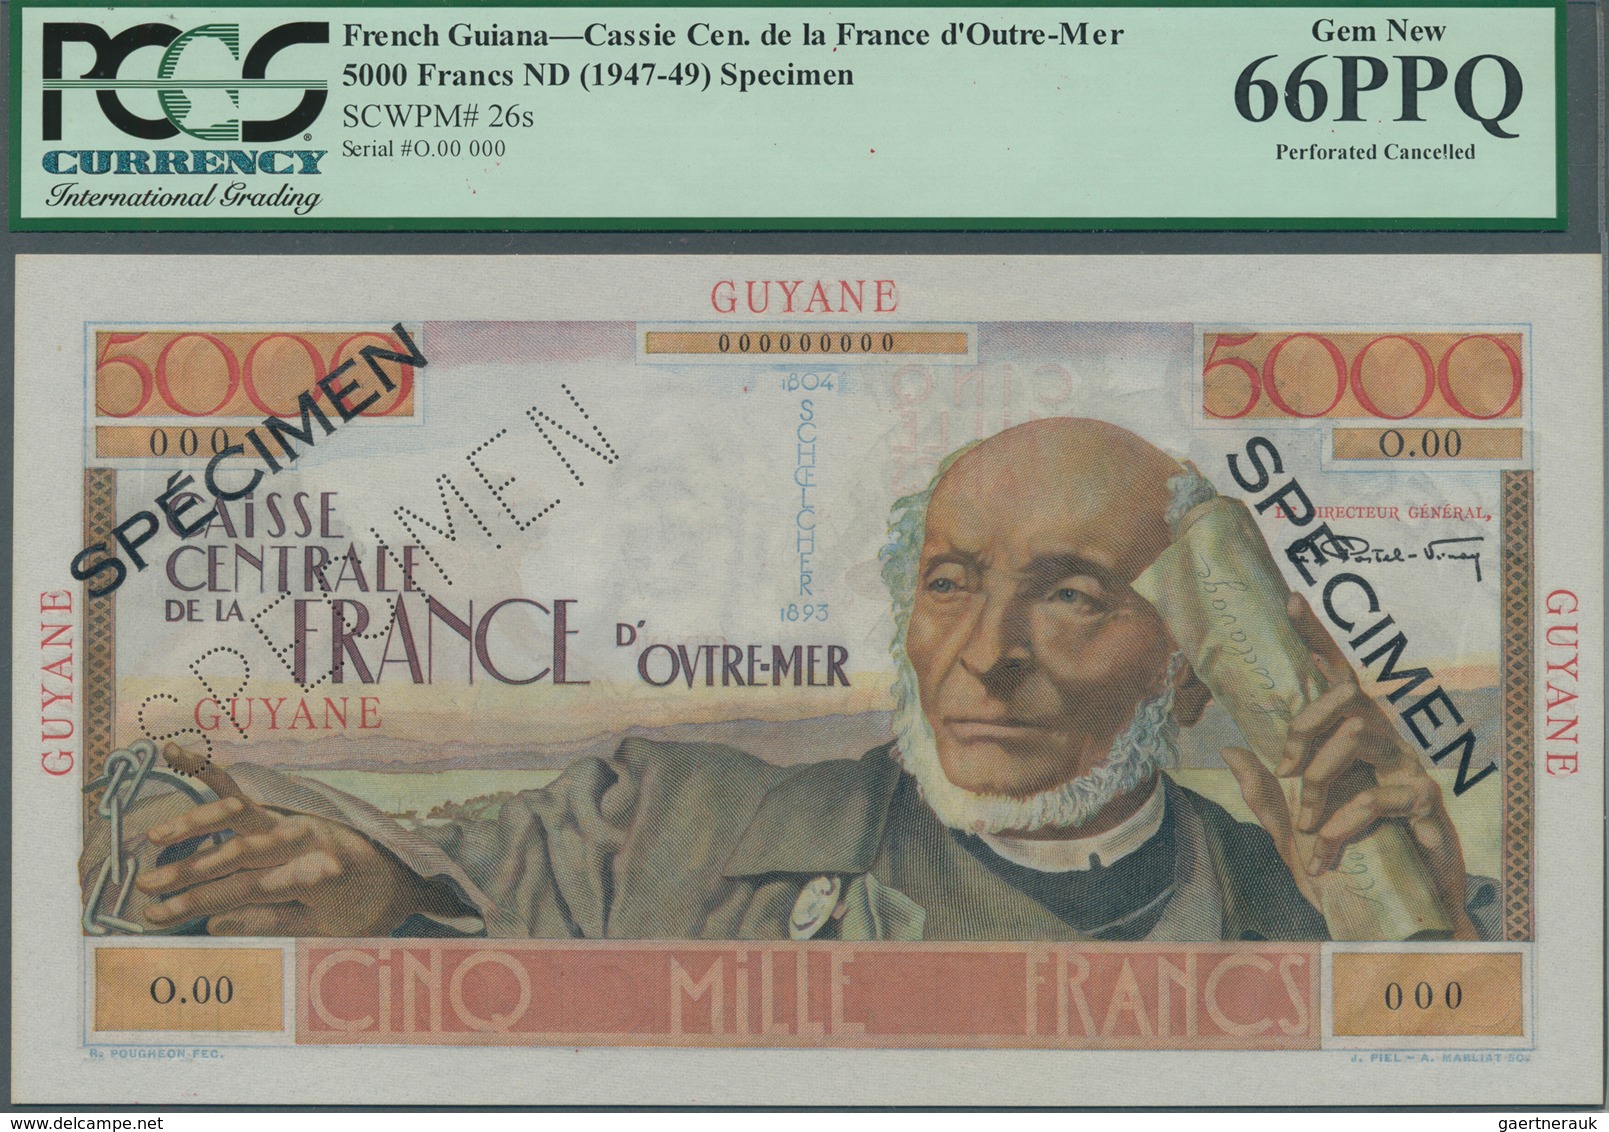 French Guiana / Französisch-Guayana: Caisse Centrale De La France D'Outre-Mer 5000 Francs ND(1947-49 - French Guiana